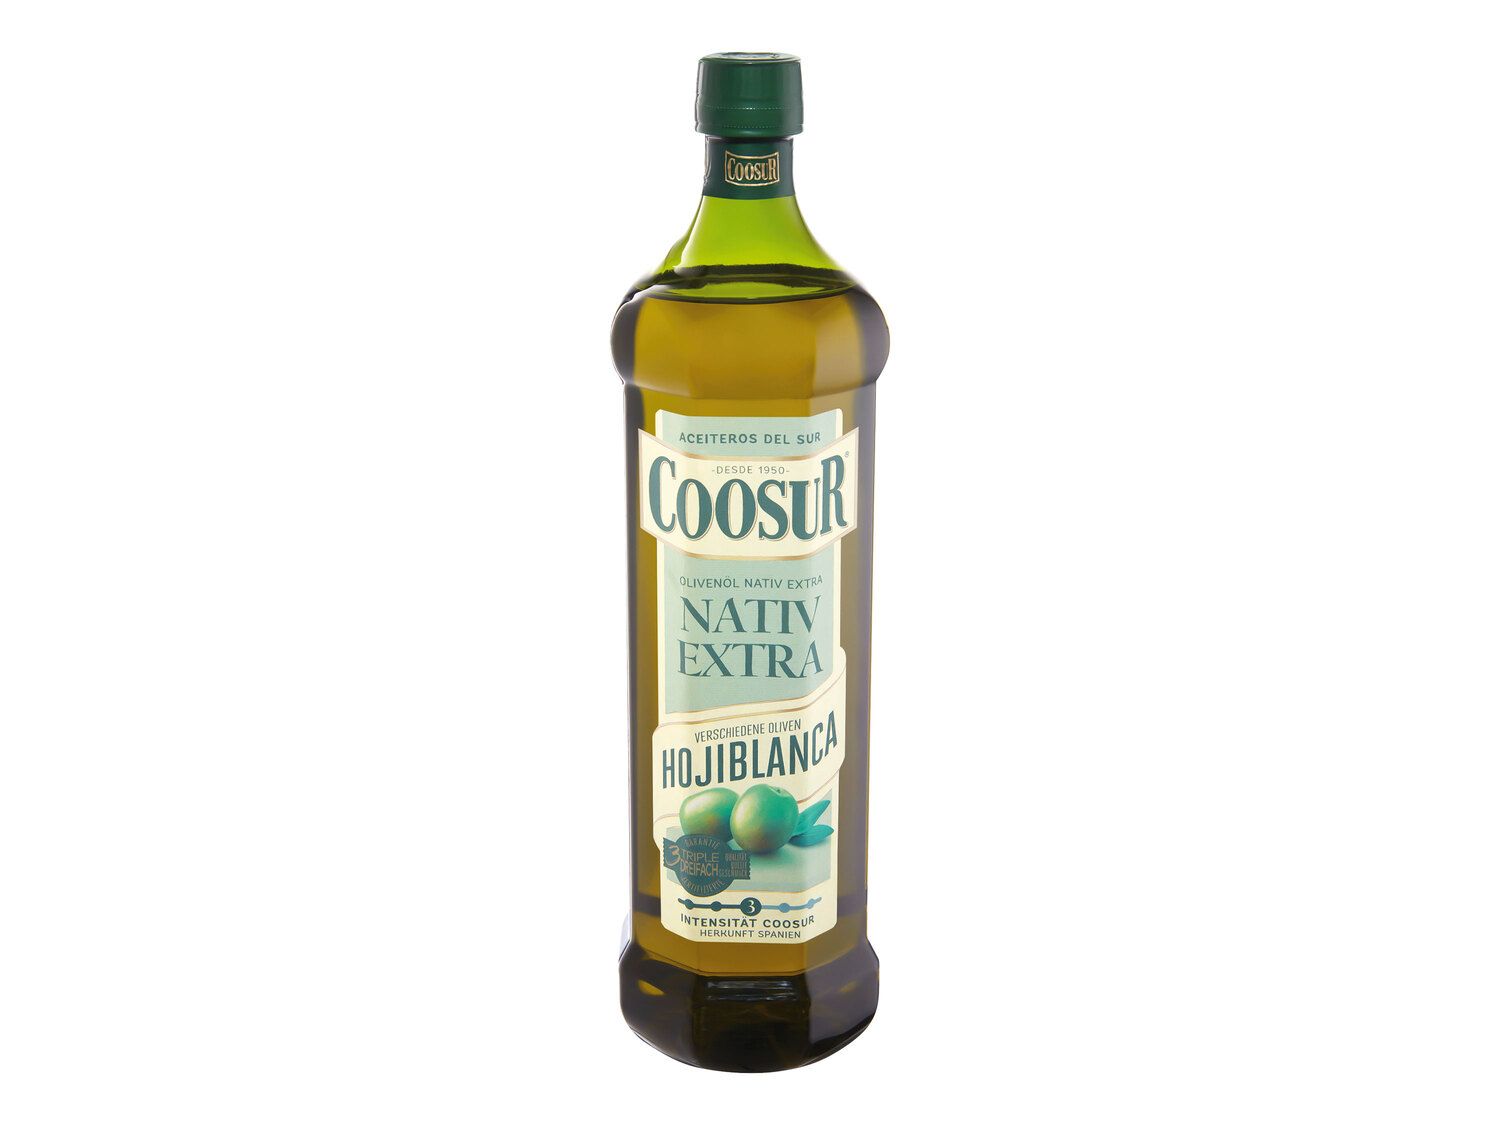 Hojiblanca Coosur Lidl - Olivenöl Deutschland